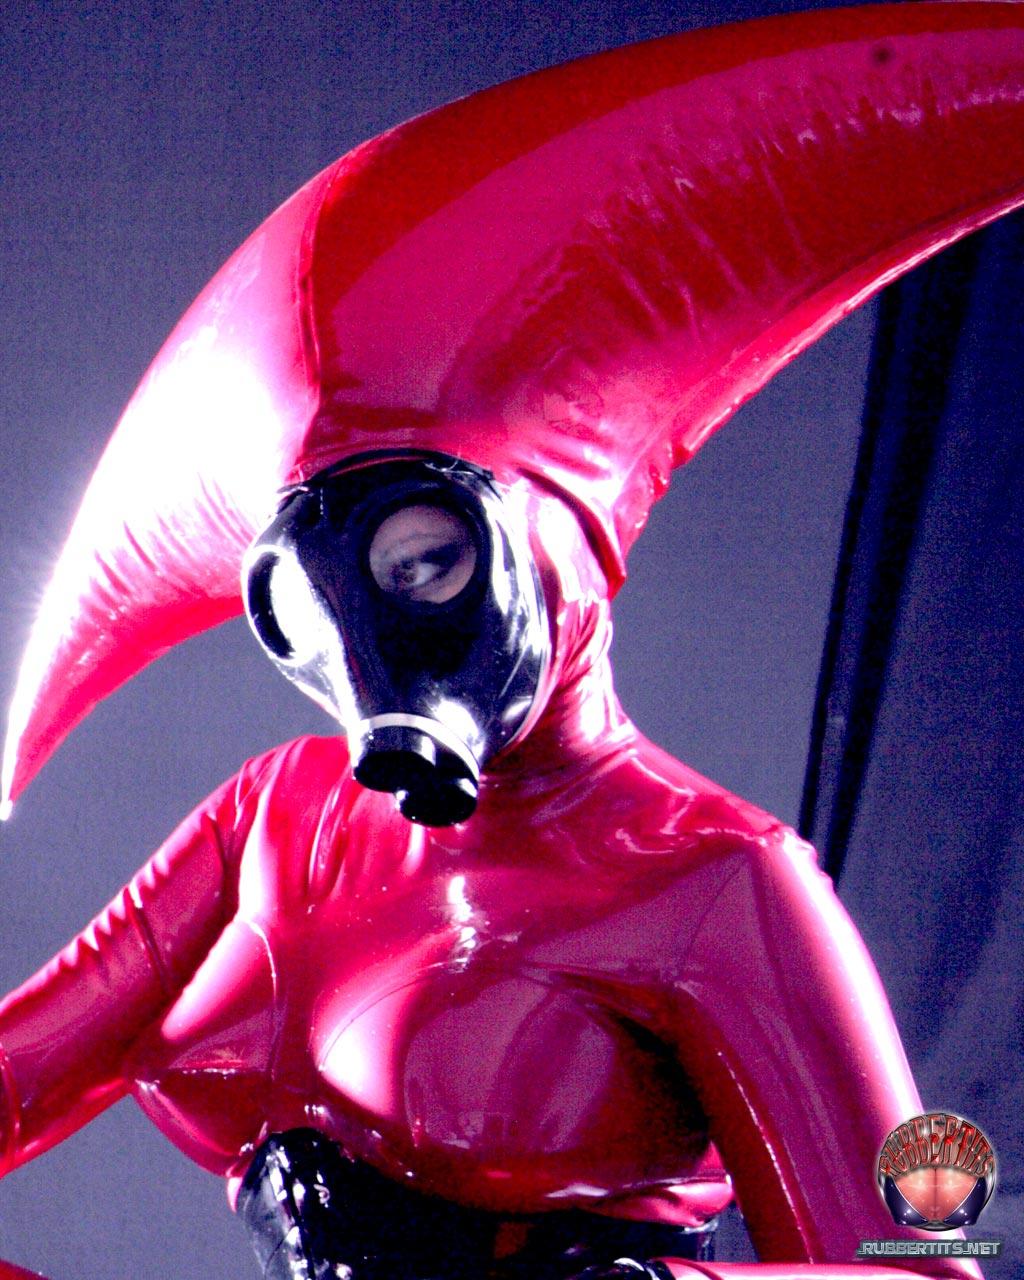 Lesbians Darkwing Zero & Lady Cassandra wear latex costumes during SFW play ポルノ写真 #422975545 | Rubber Tits Pics, Darkwing Zero, Lady Cassandra, Latex, モバイルポルノ